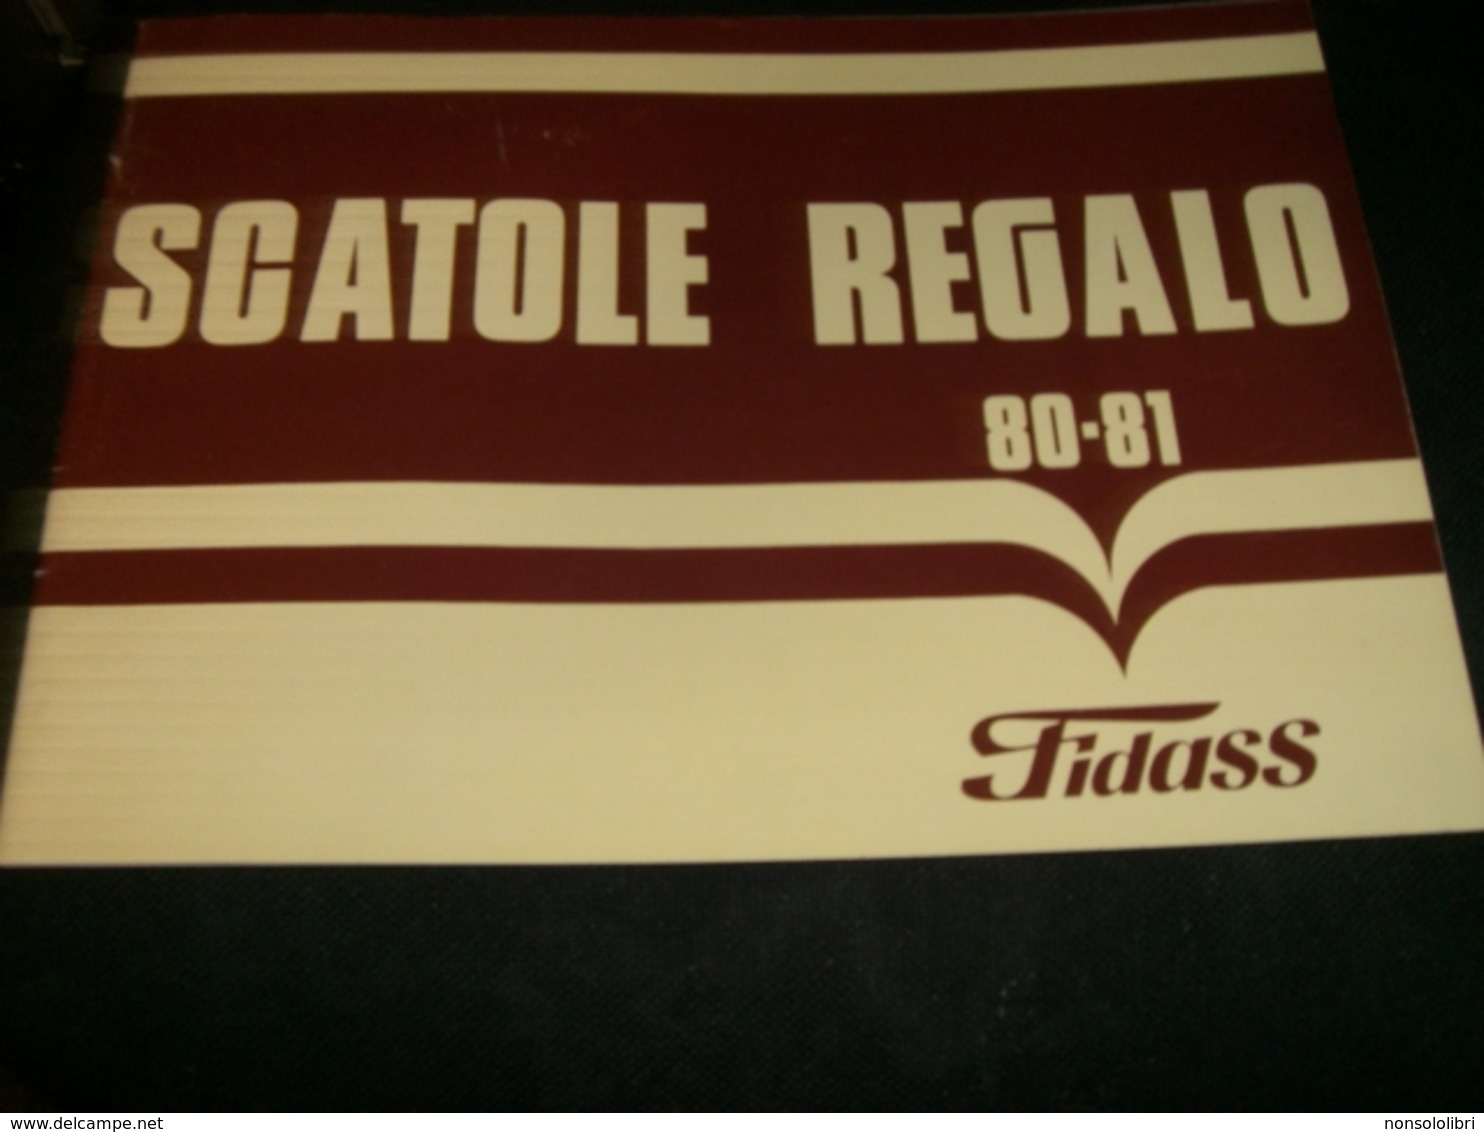 CATALOGO SCATOLE REGALO 80-81 FIDASS - Chocolat